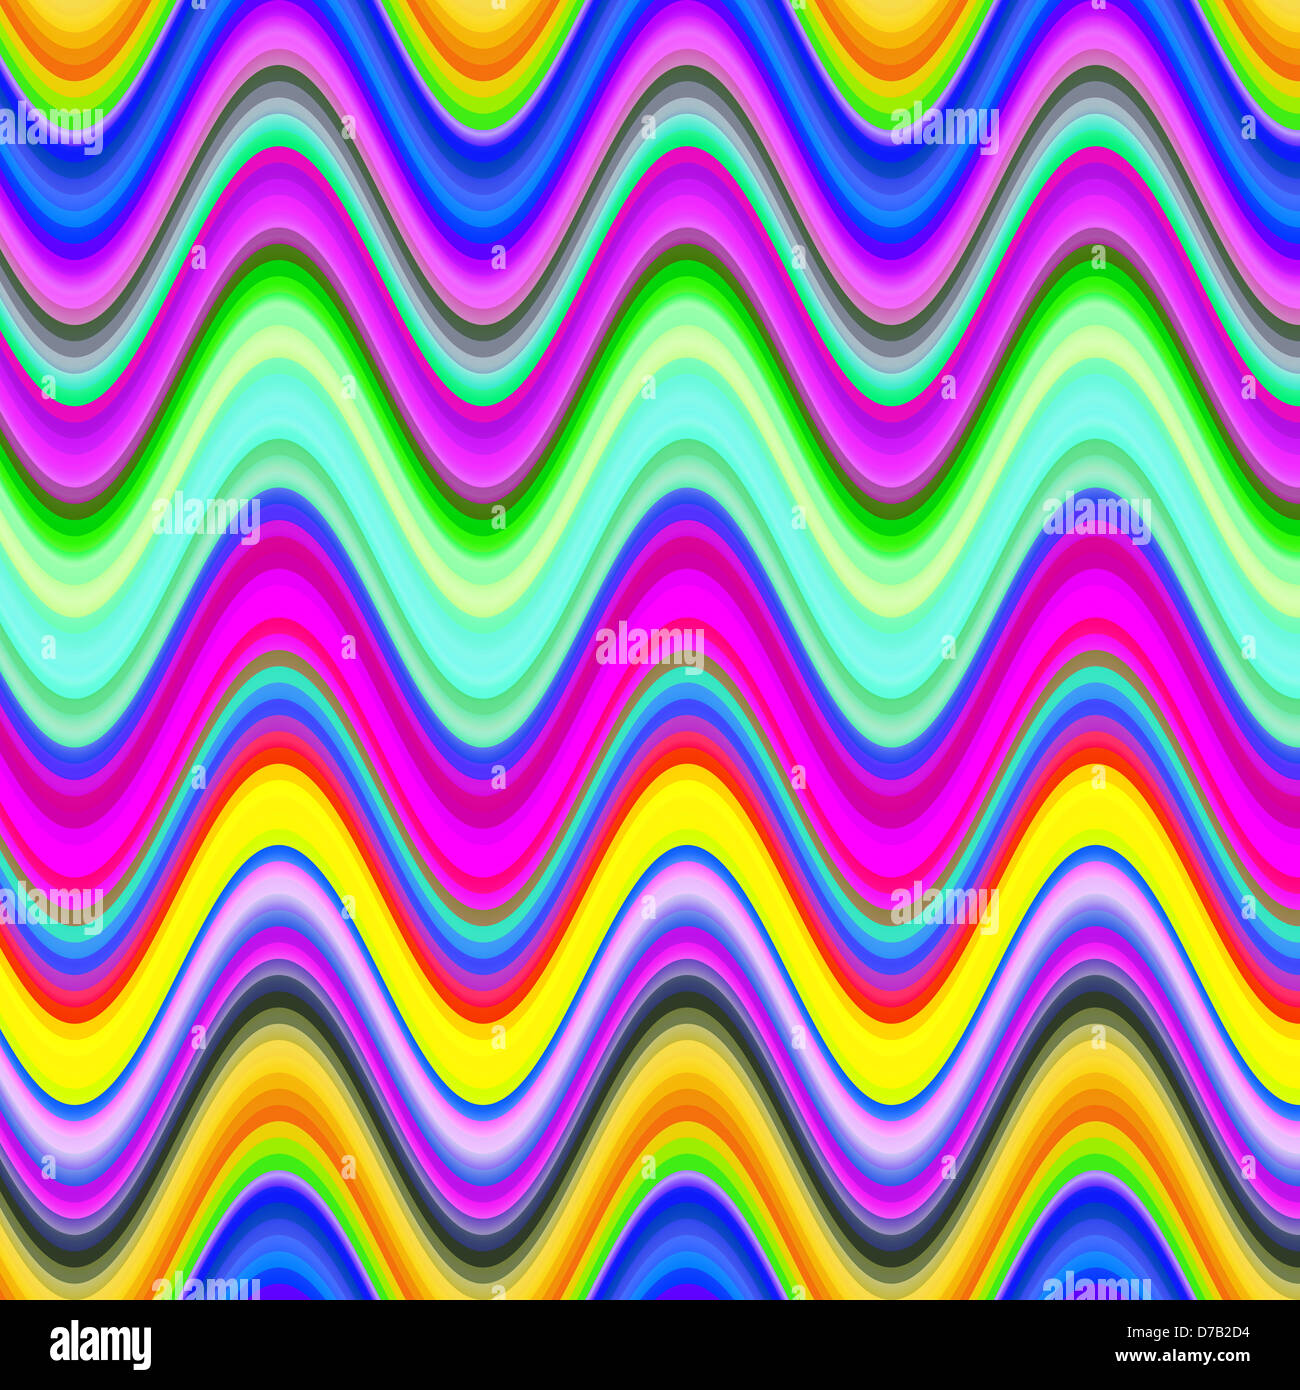 Vibrant multicoloured digital waves illustration. Stock Photo